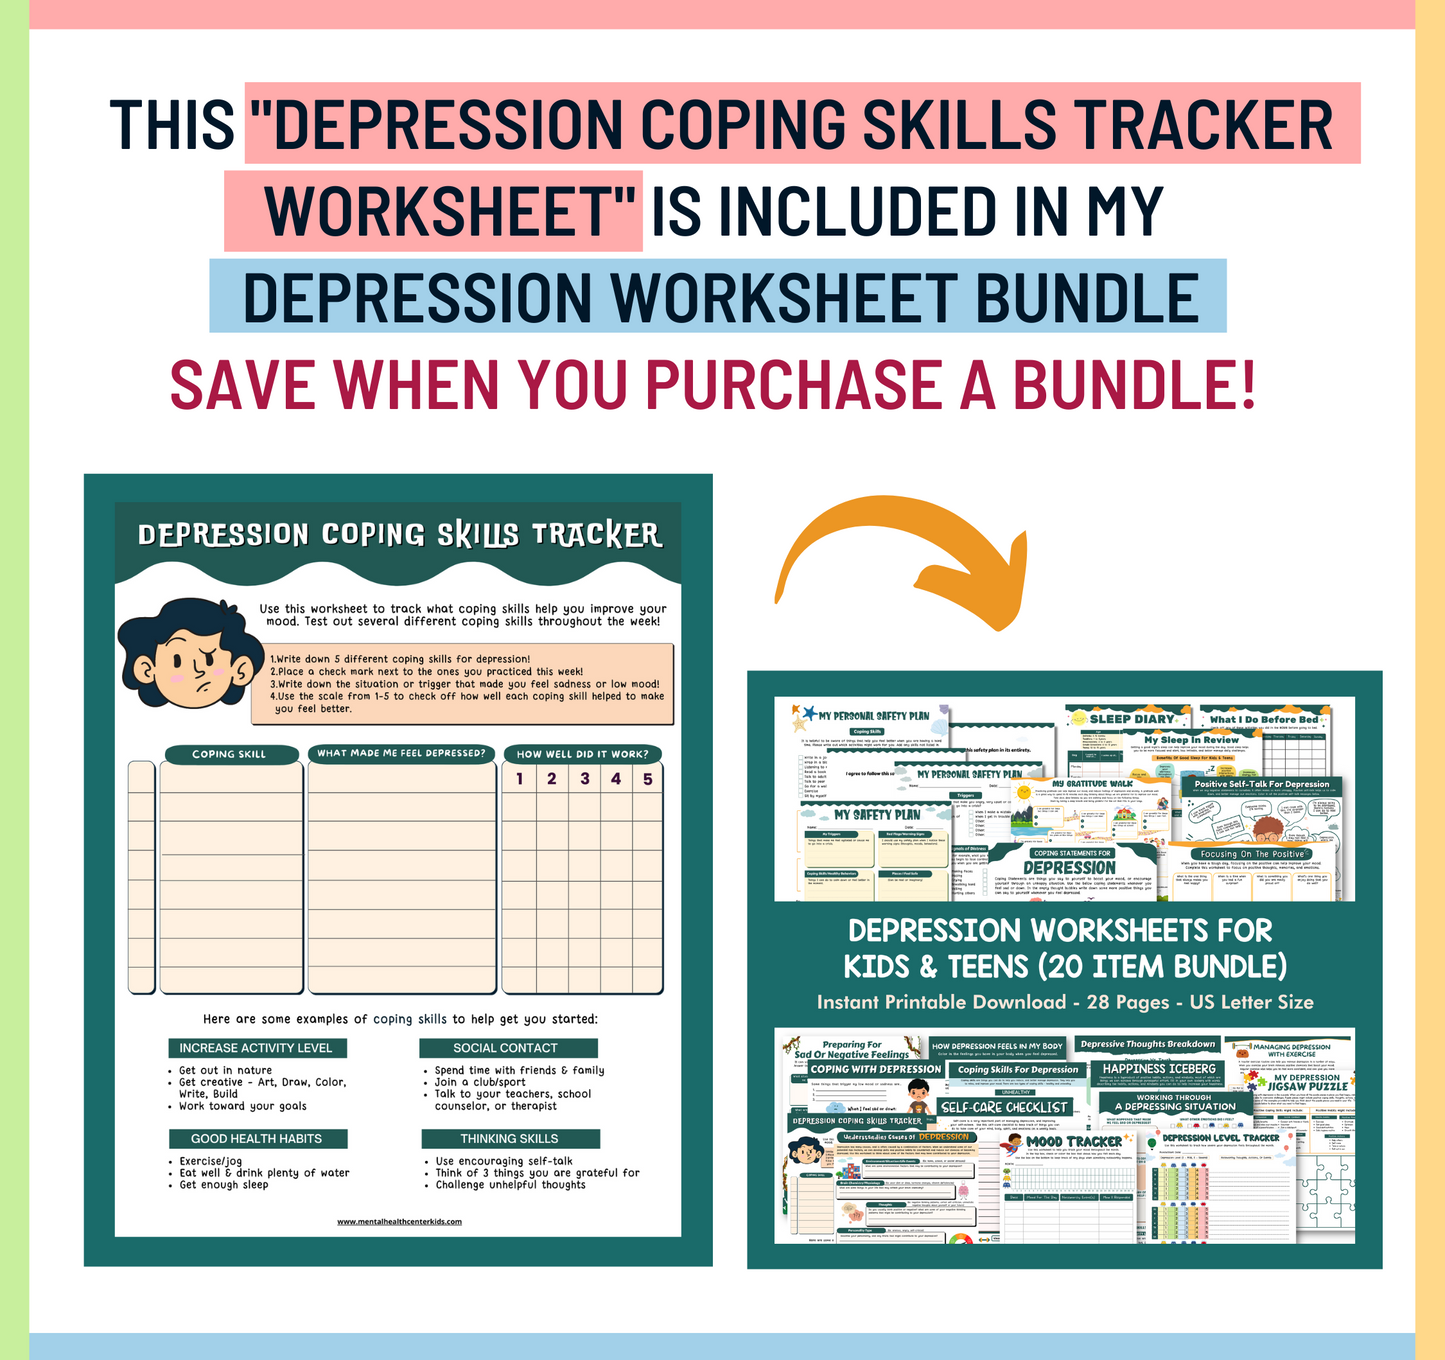 Depression Coping Skills Tracker